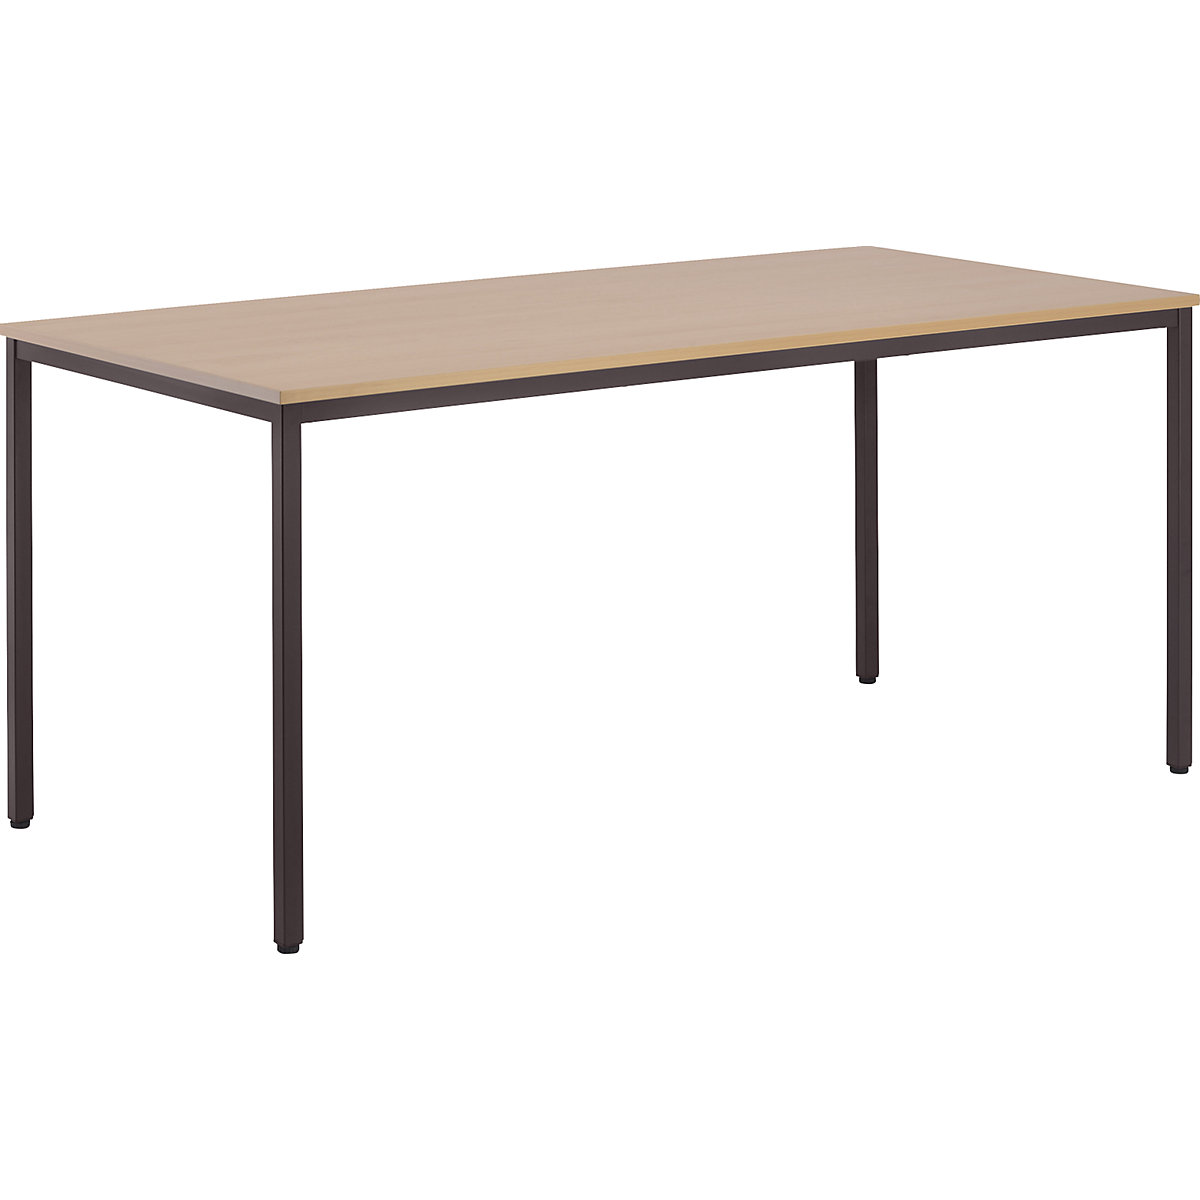 Multifunctionele tafel – eurokraft basic, h x b x d = 720 x 1600 x 800 mm, blad beukenhoutdecor, frame grijsbruin